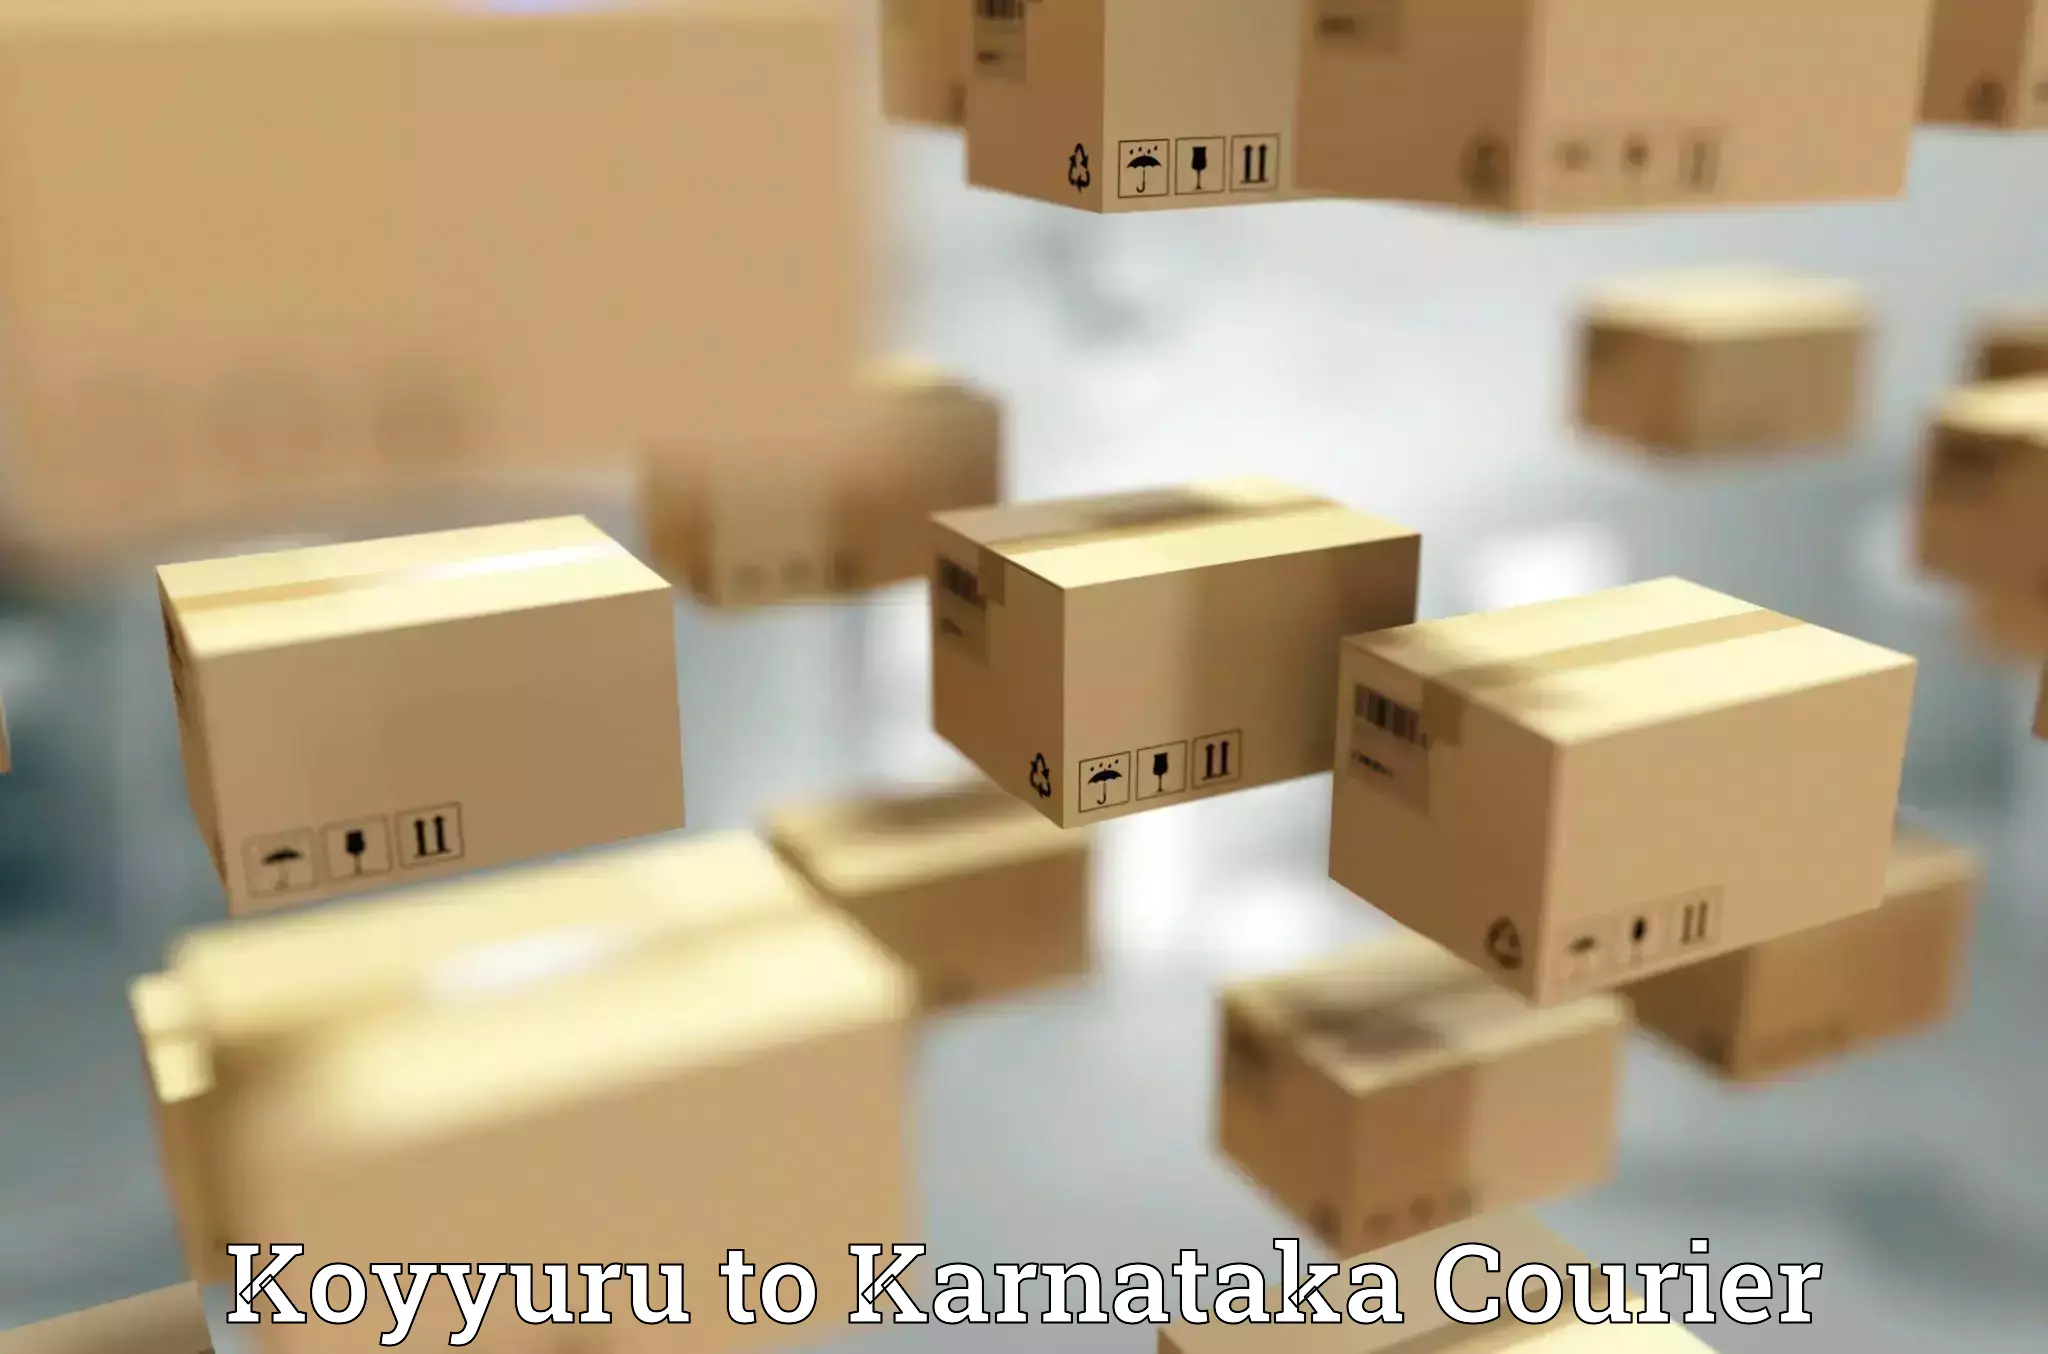 Courier service partnerships in Koyyuru to Holesirigere